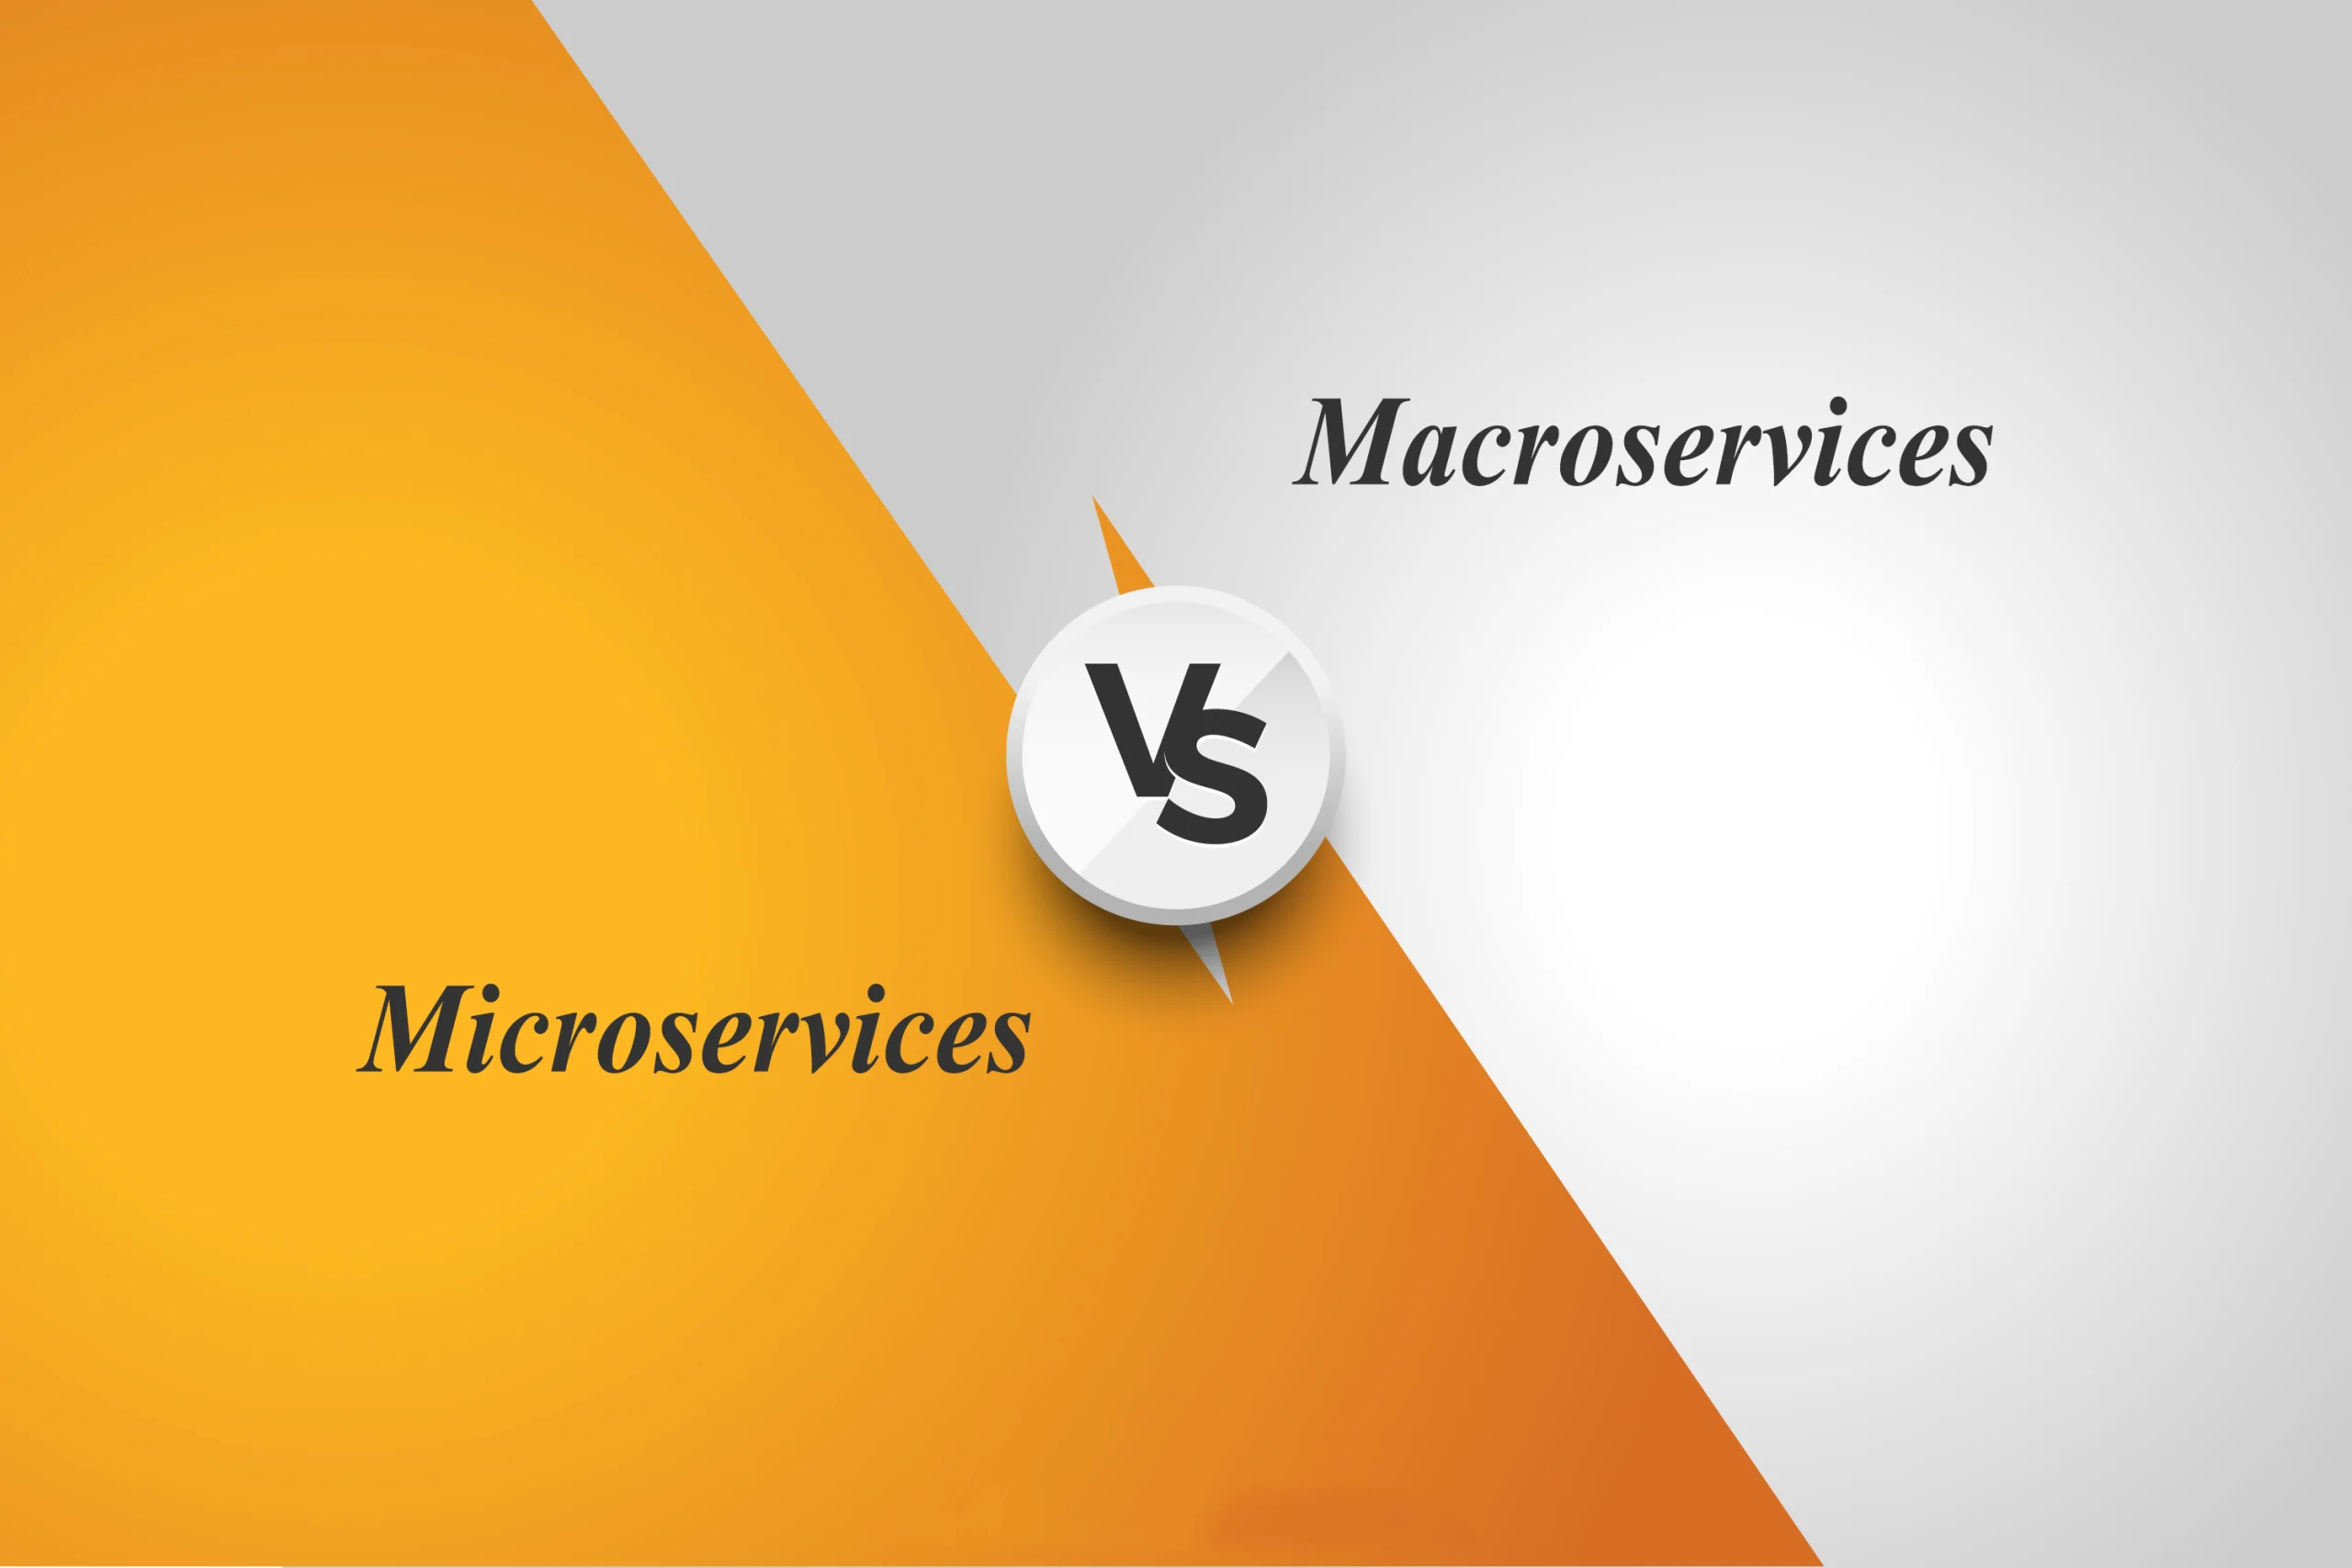 Macroservices VS Microservices